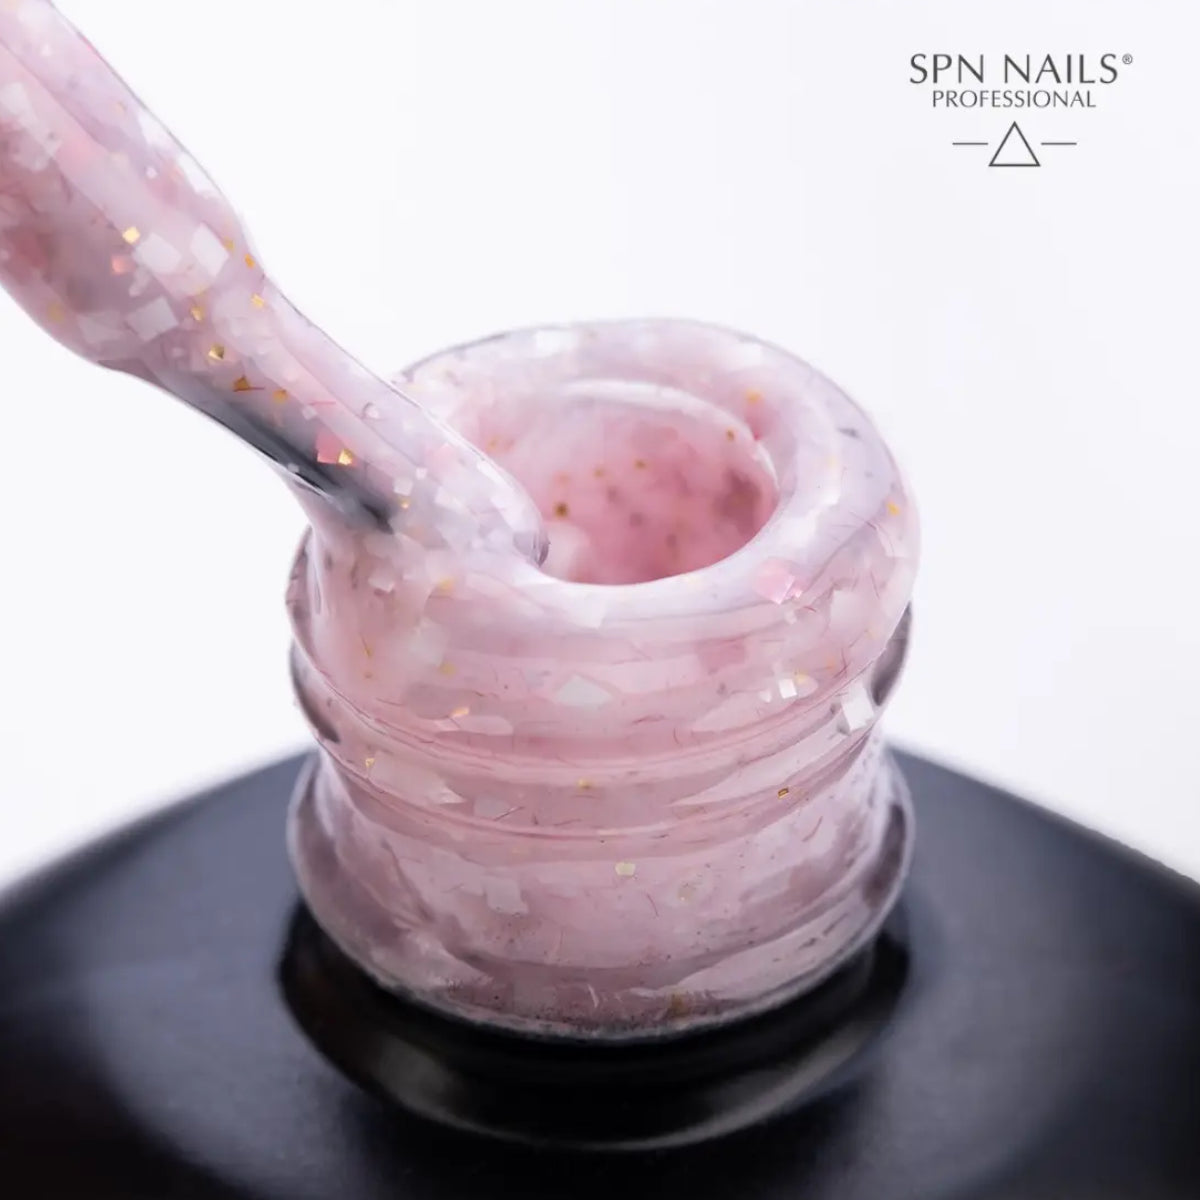 SPN Nails Funny Base Funny #1 Pink Glitter